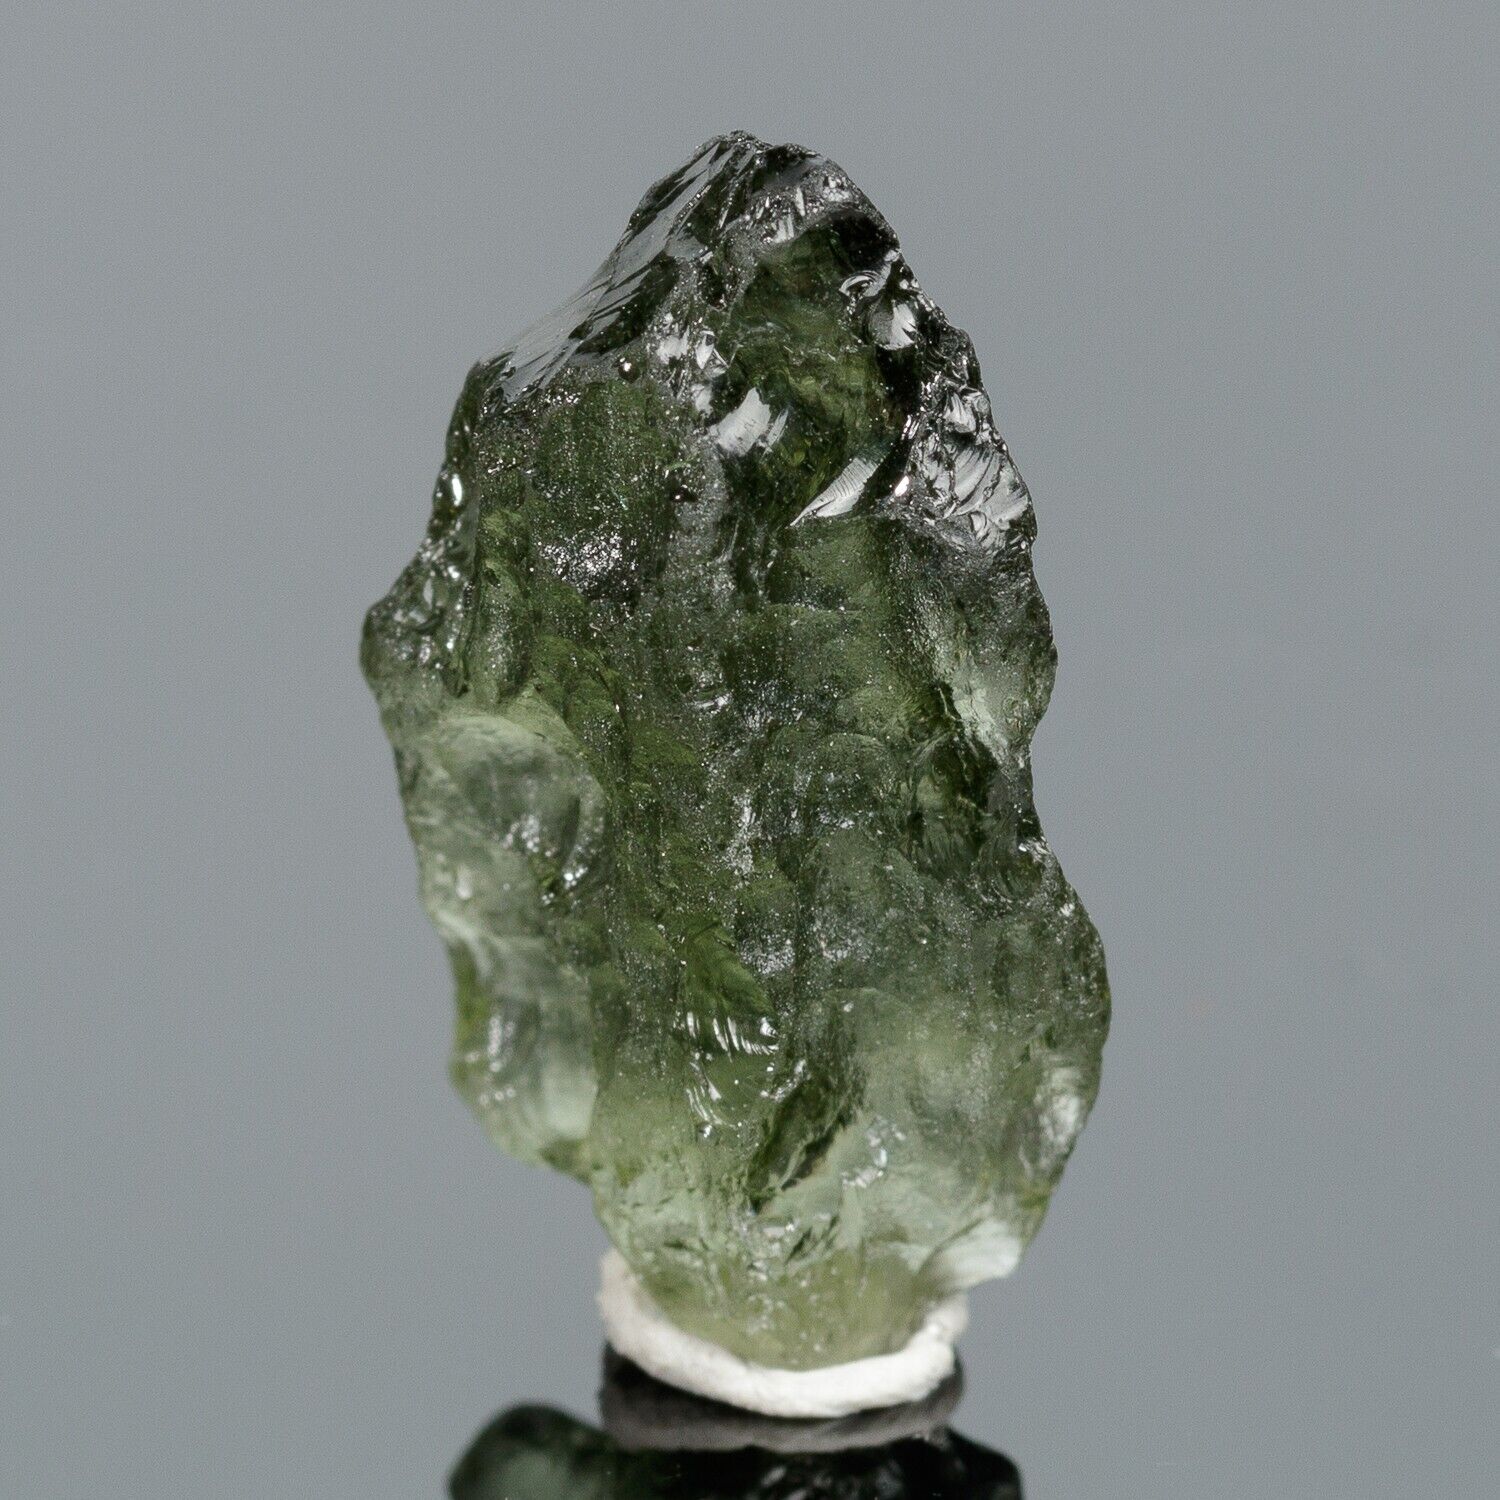 MOLDAVITE green crystal tektite impact meteorite 7.5cts raw#7518T Czech Republic